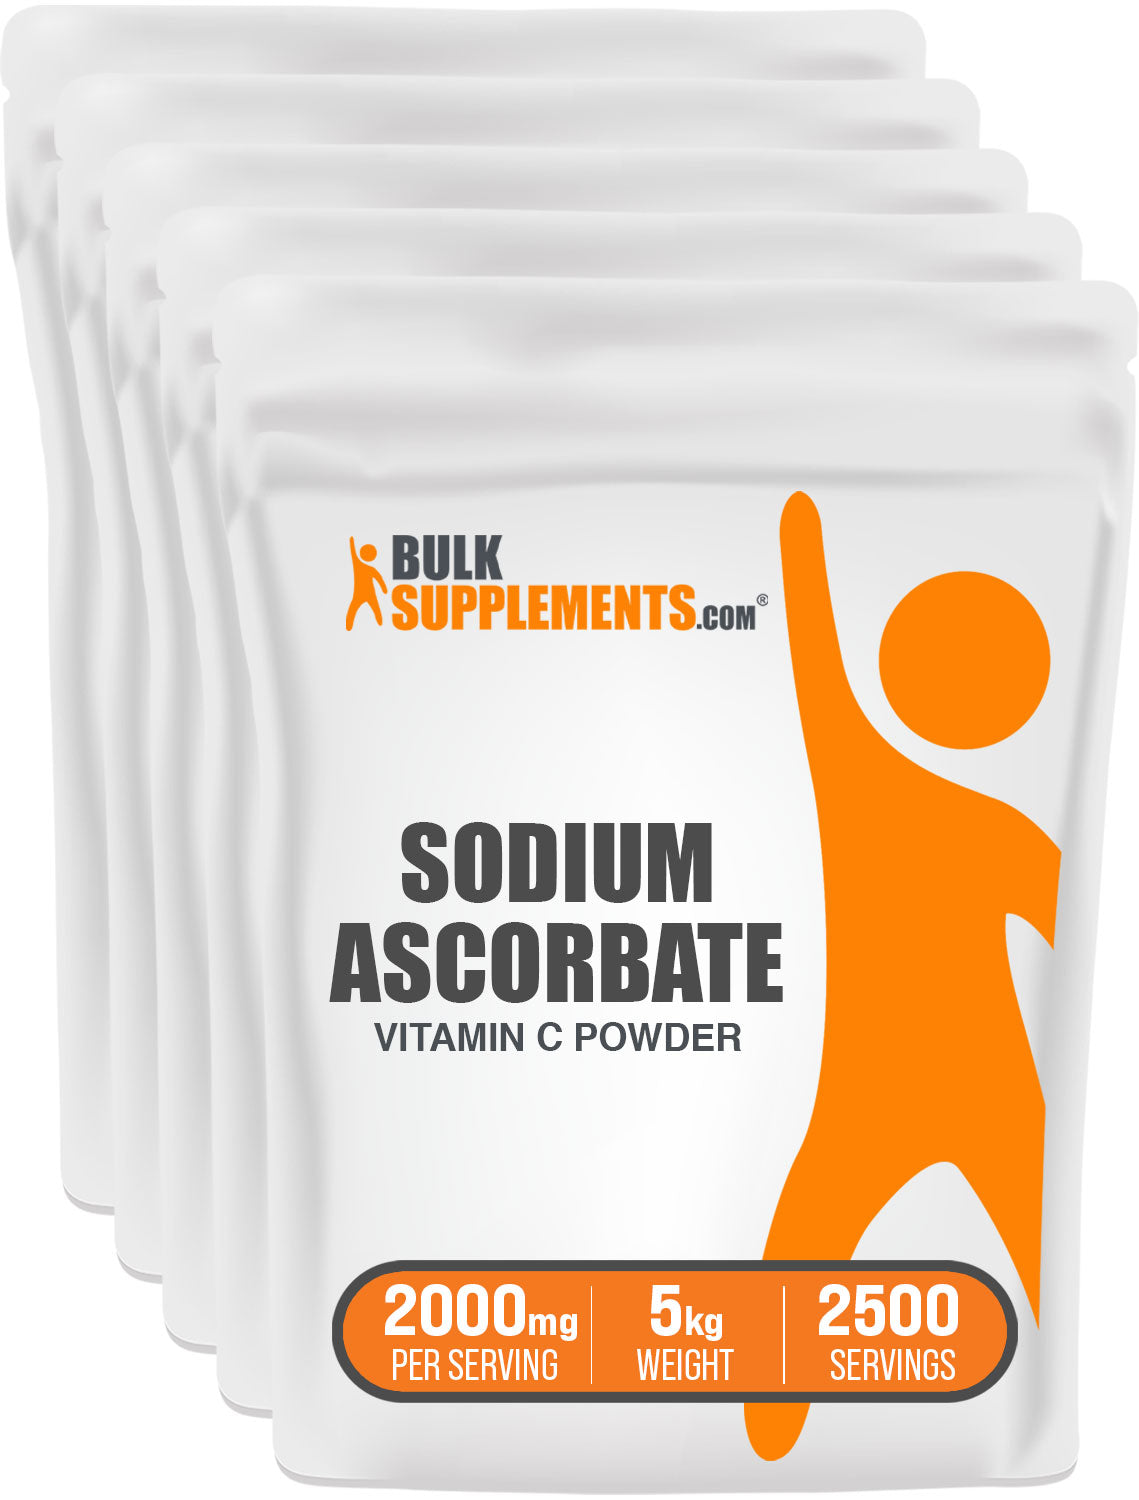 BulkSupplements Sodium Ascorbate Vitamin C Powder 5kg bag